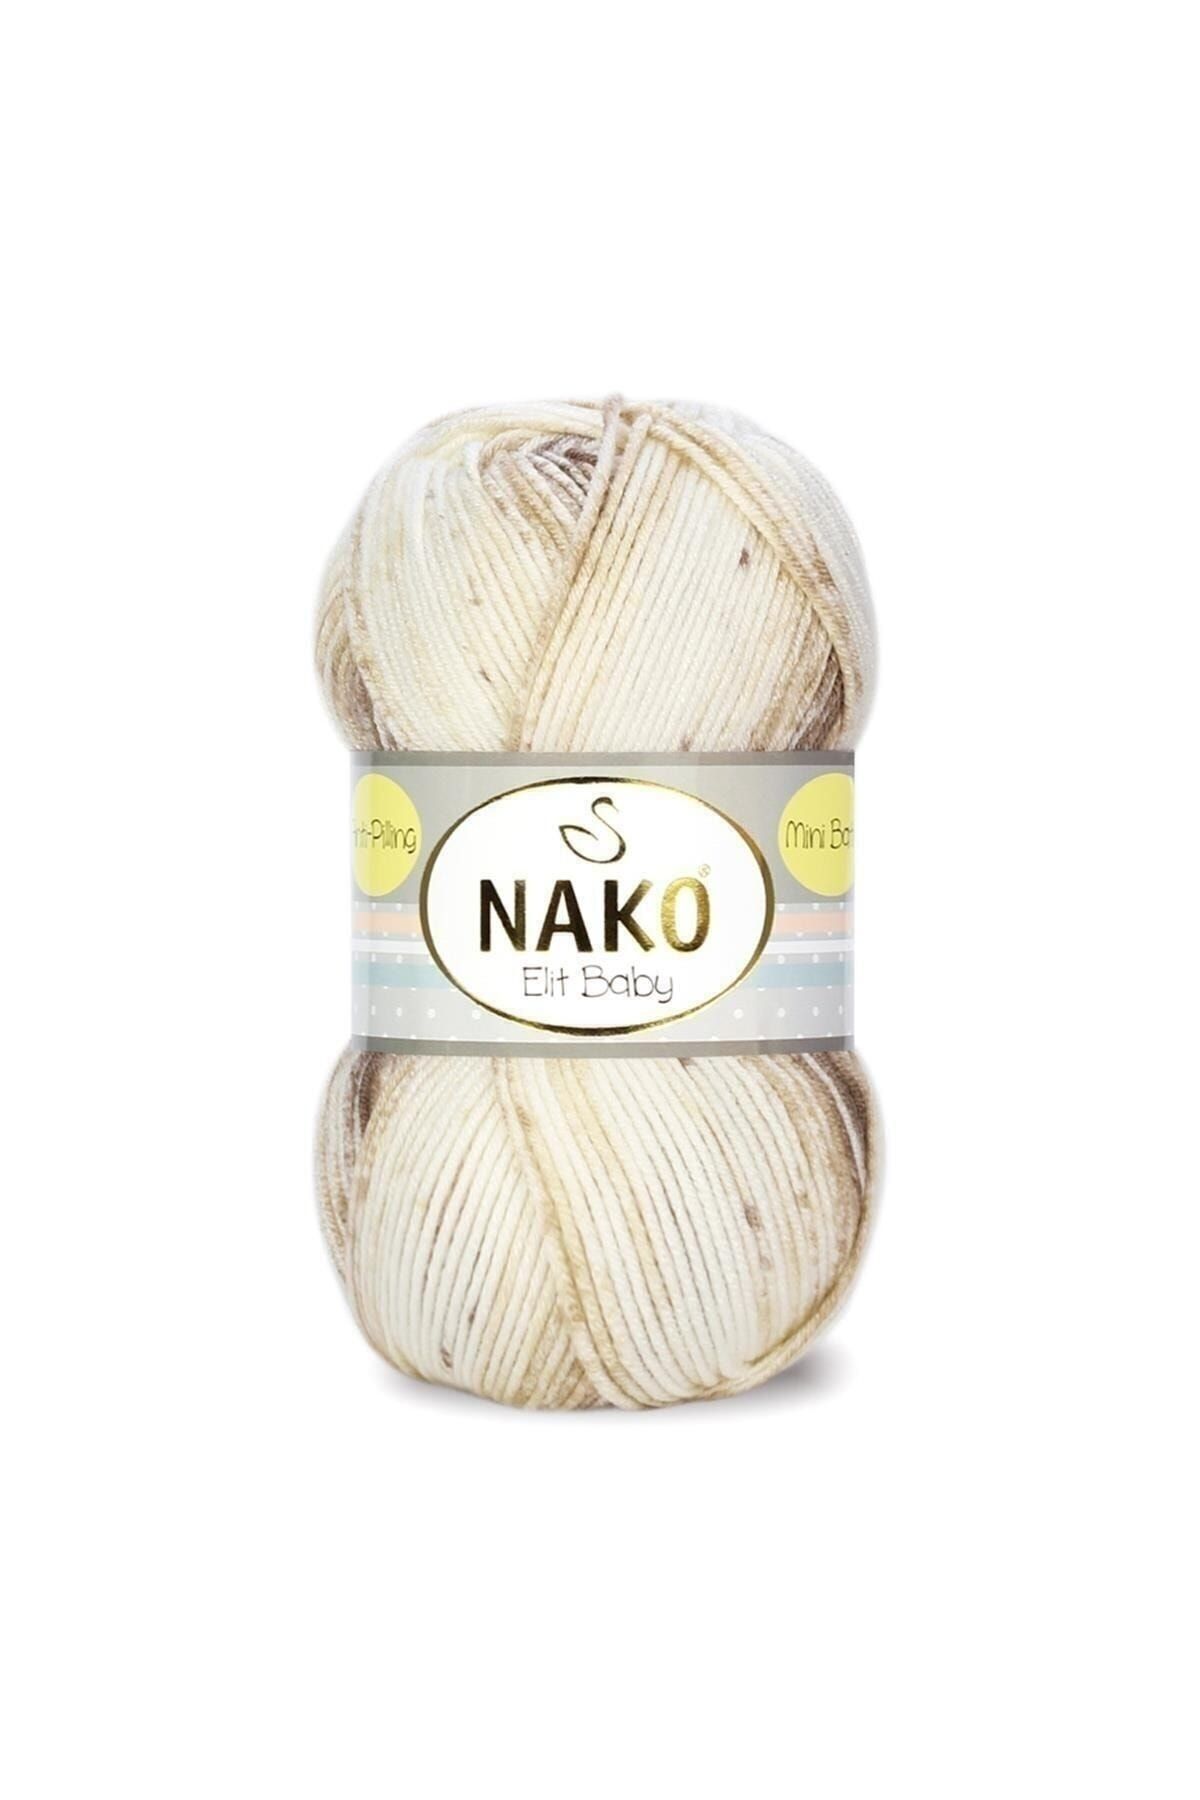 Nako Elit Baby Mini Batik 32426 Kahve-beyaz.